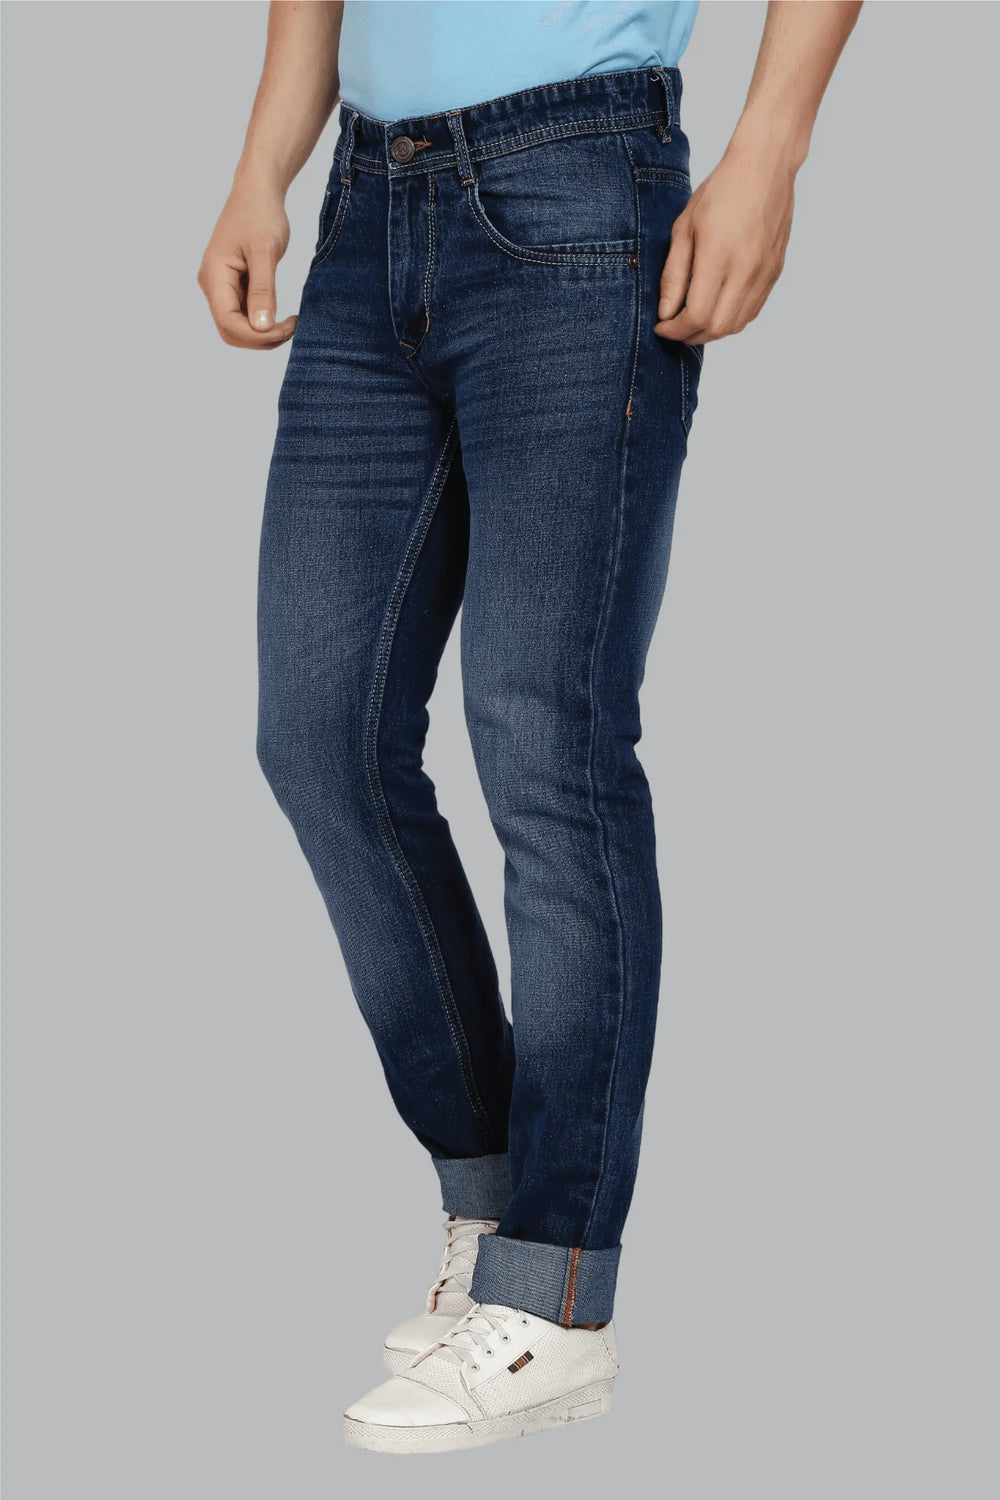 Slim Fit Blue with Shade Denim Jeans For Men - Peplos Jeans 